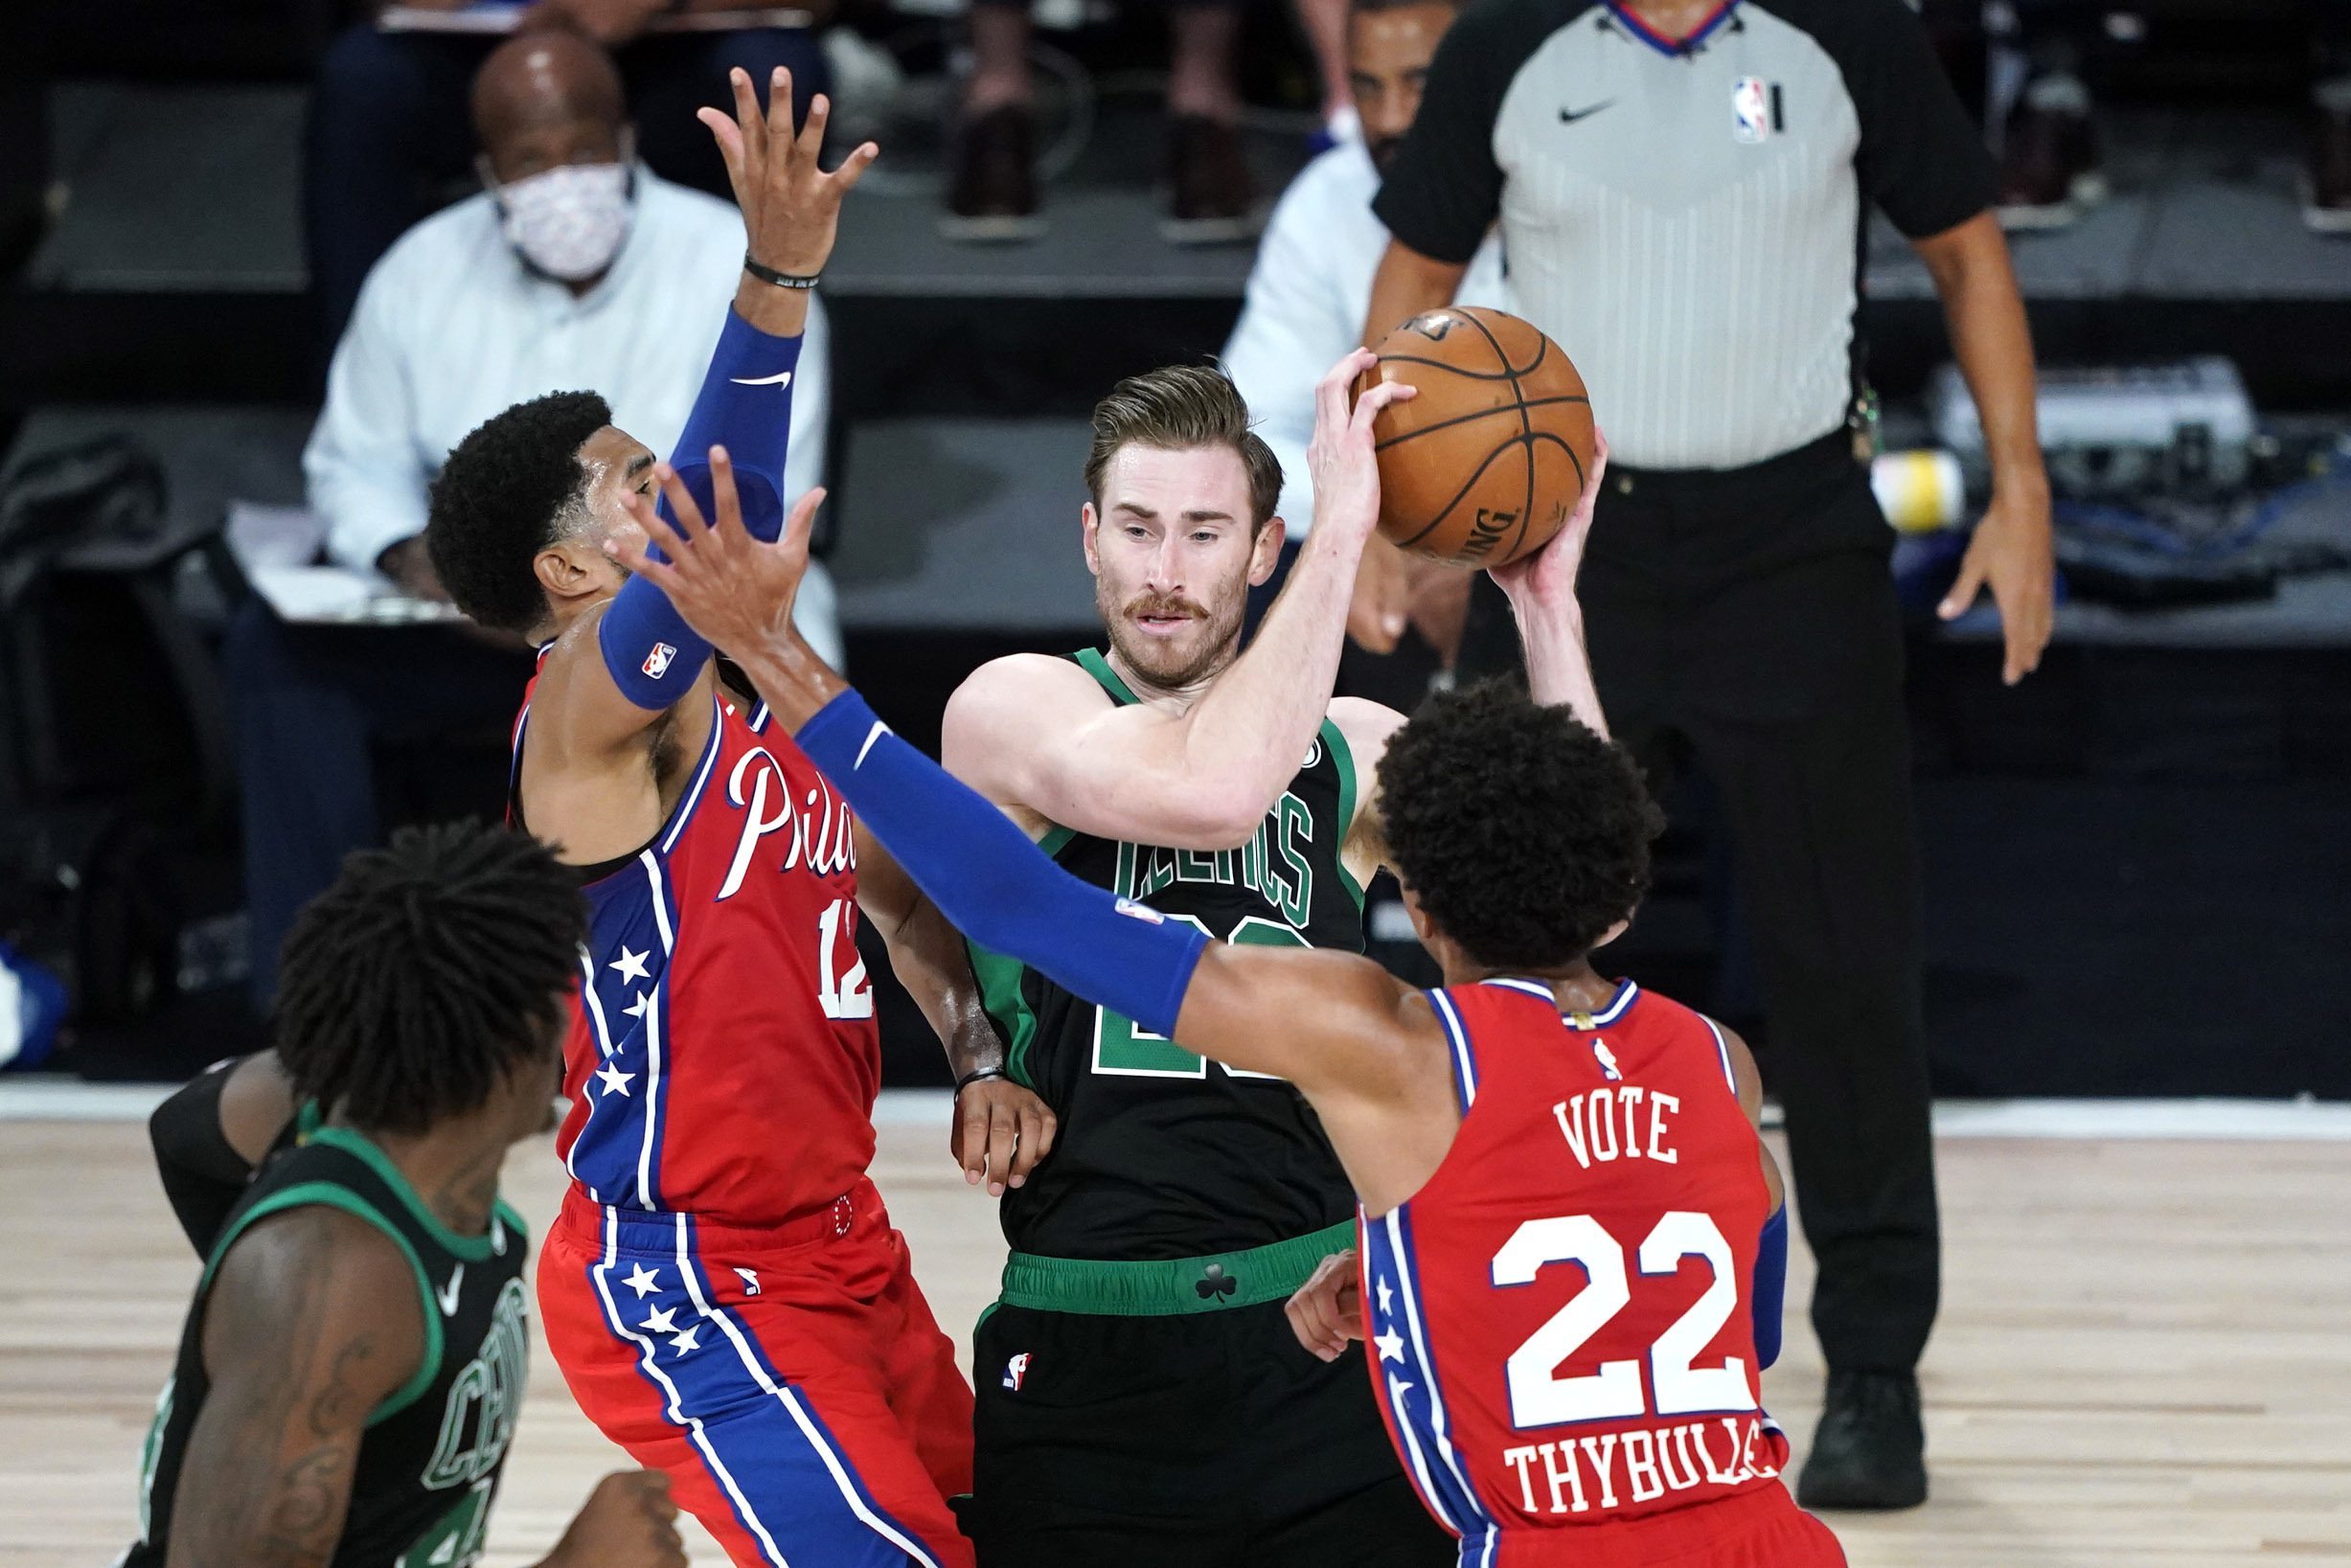 Gordon Hayward: The Real-Life Diet of the Celtics Forward